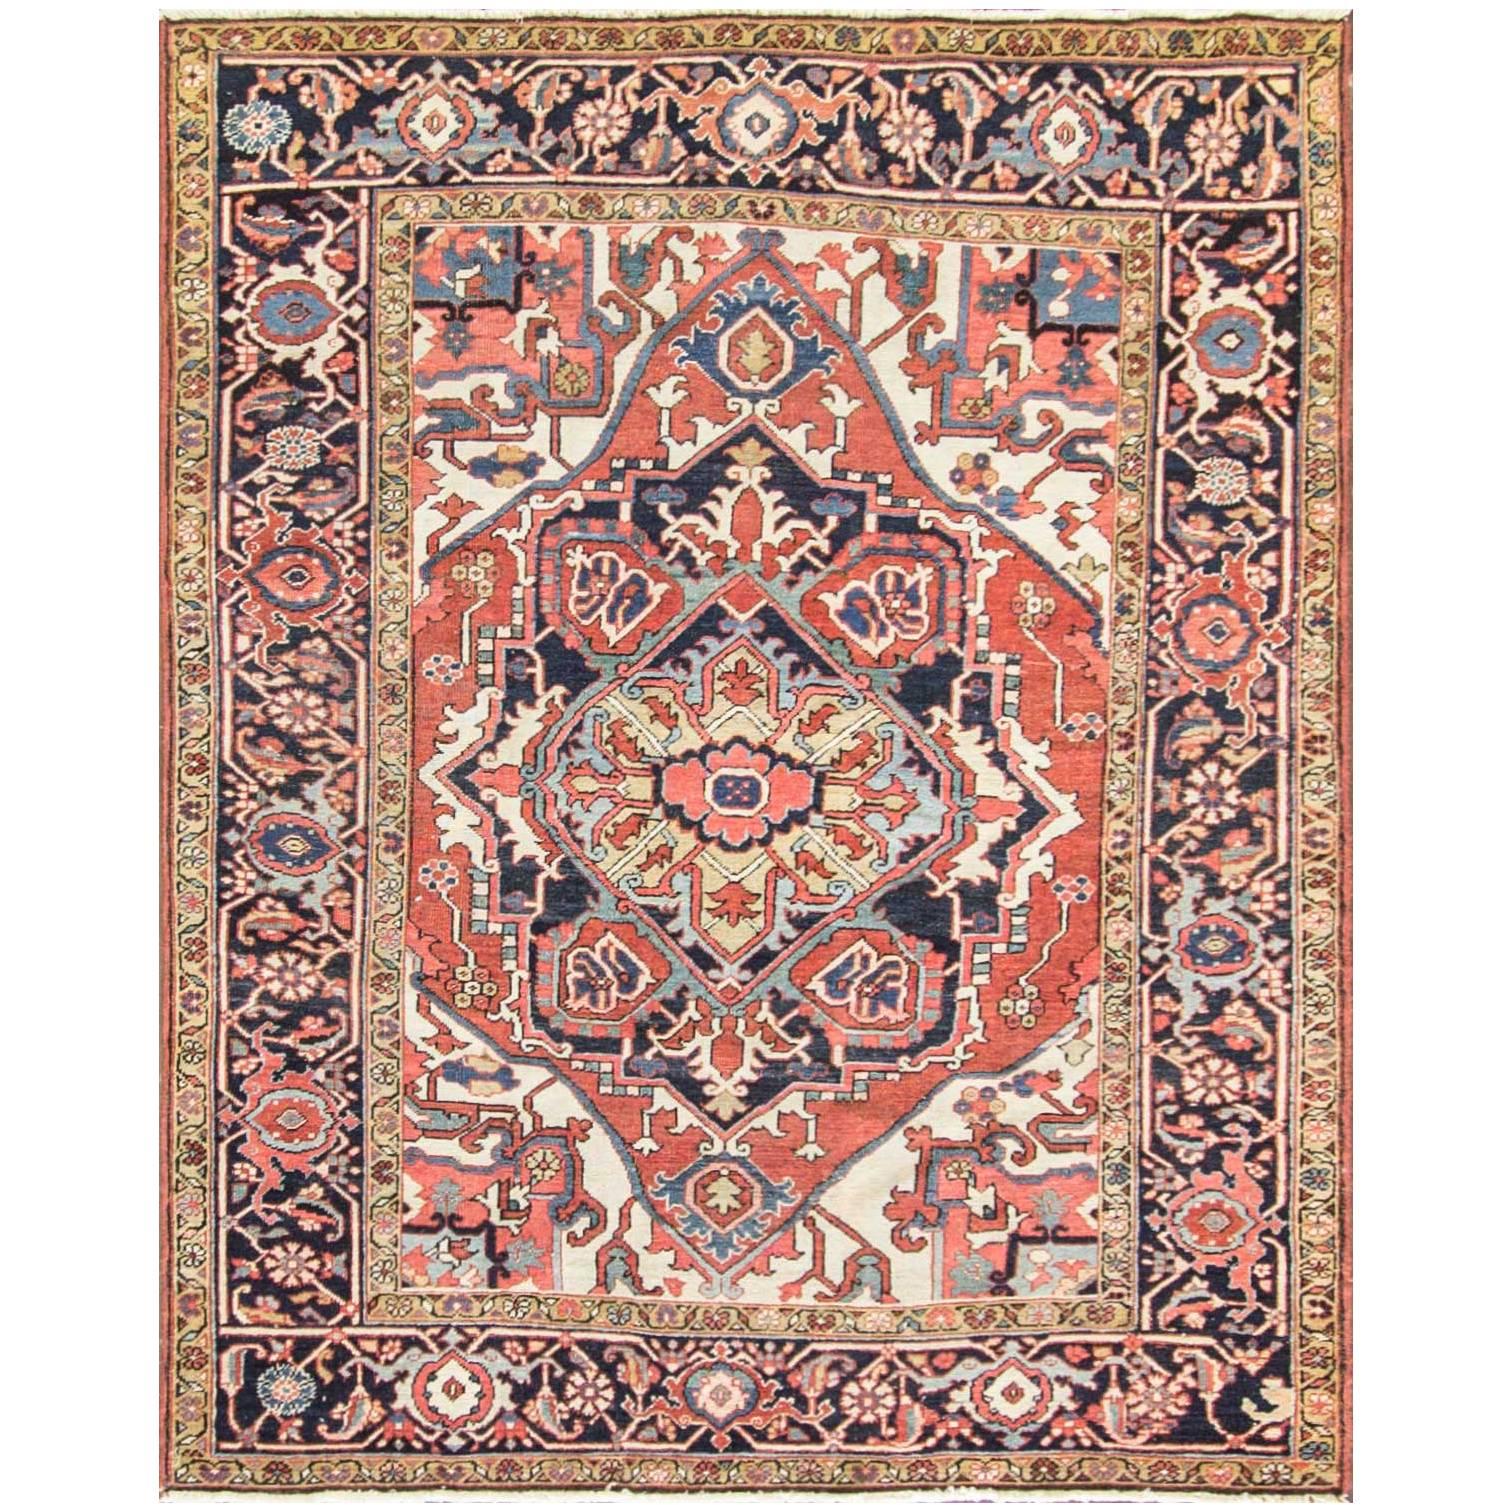  Antique Persian Serapi Rug, 4'11" x 6'3" For Sale